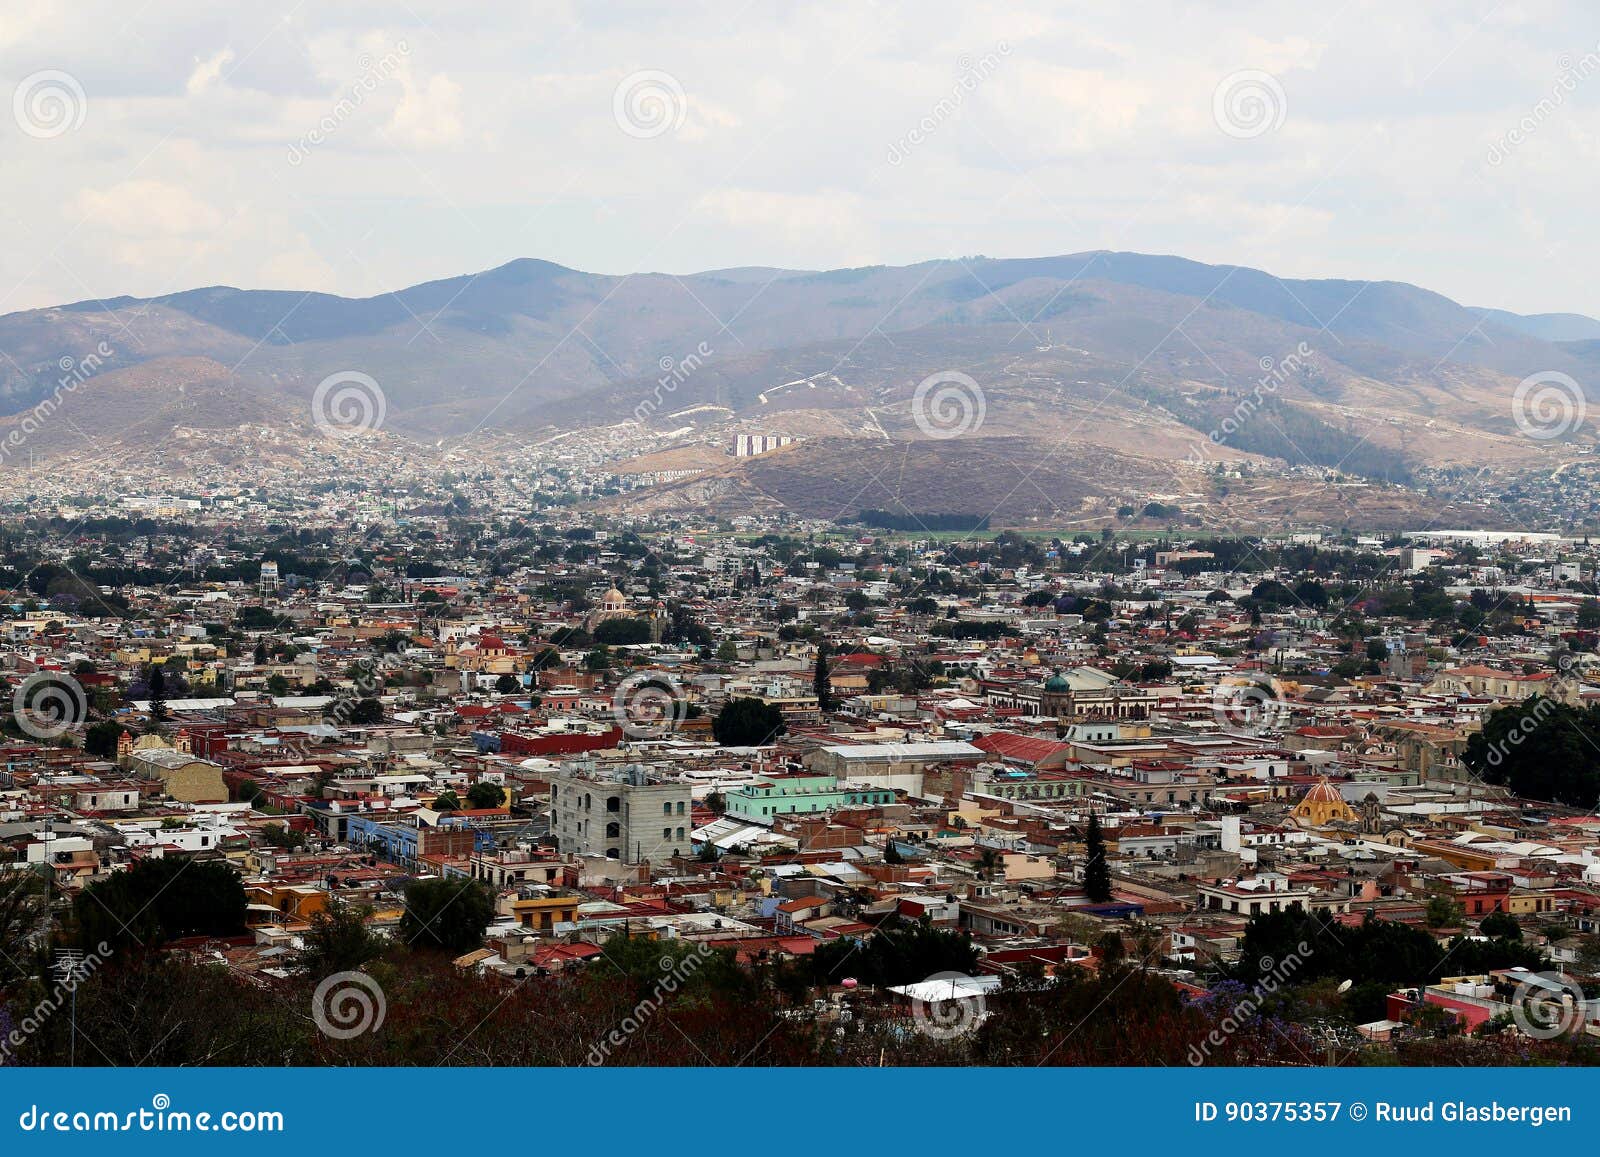 looking over oaxaca city, mexico.